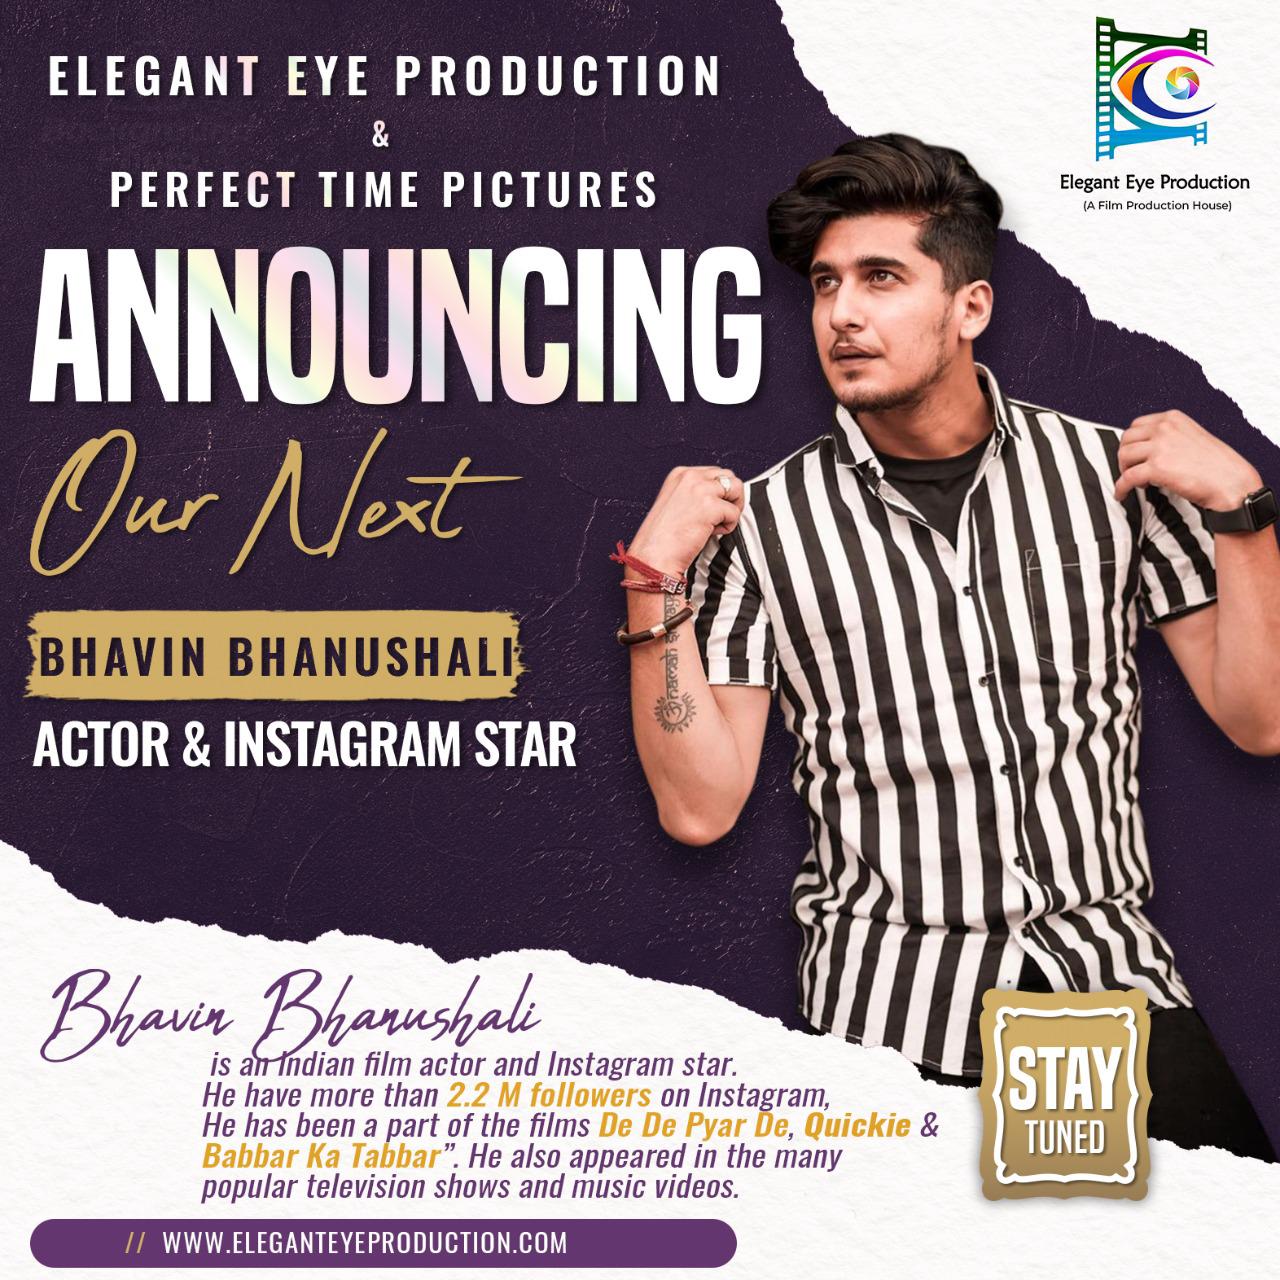 Announcing Our Next - Bhavin Bhanushali